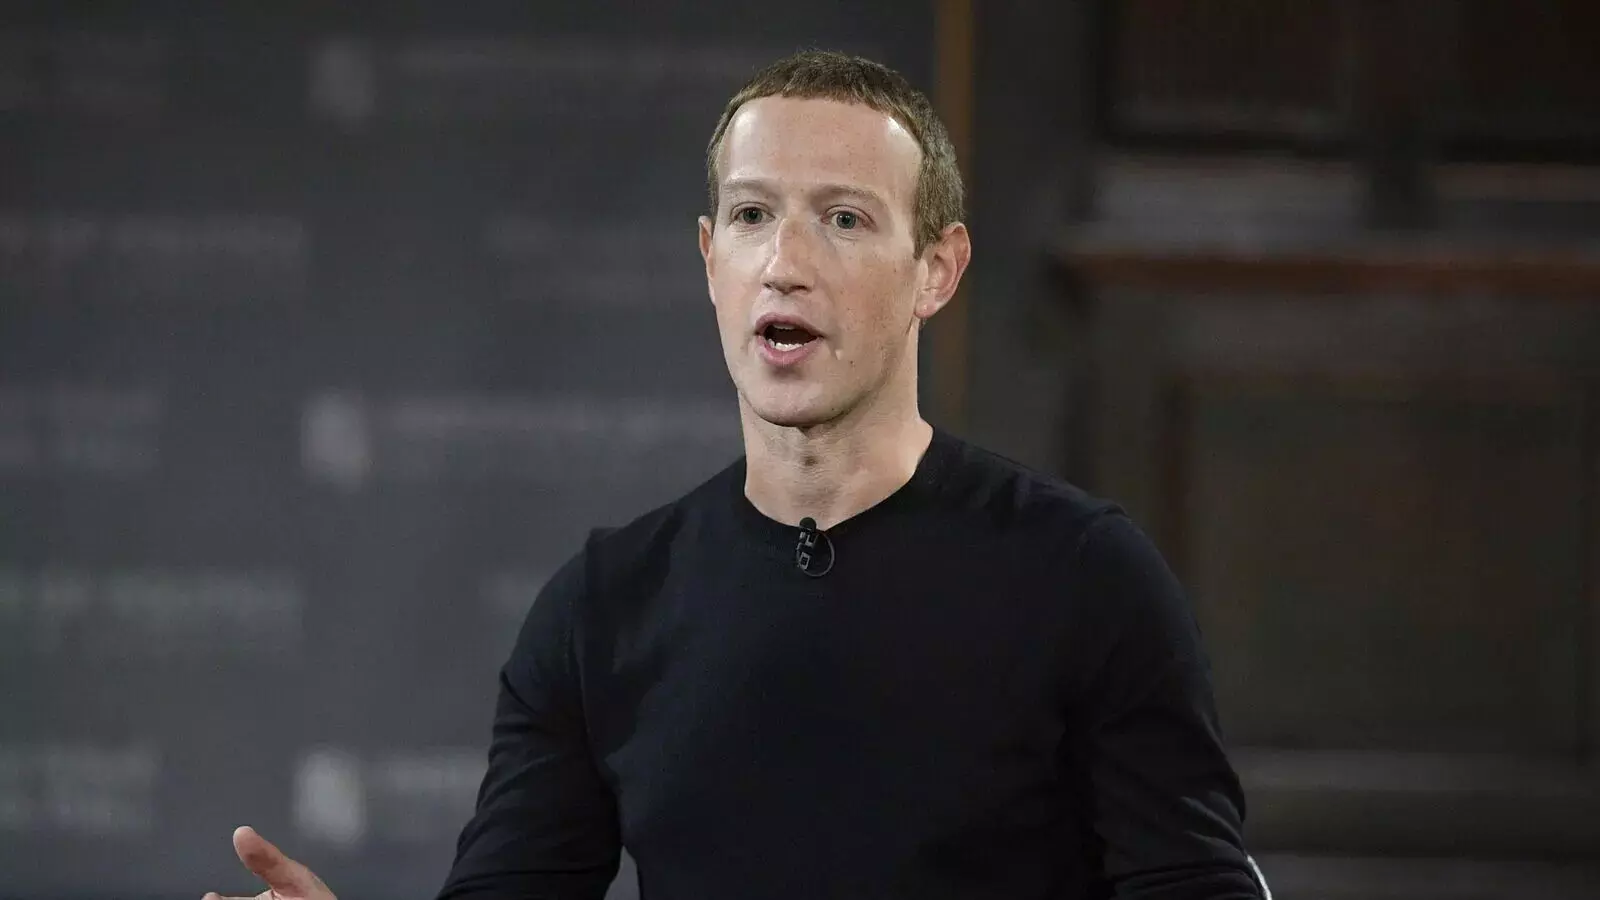 Mark Zuckerbergs Meta faces lawsuit over alleged disregard for user mental health on Instagram